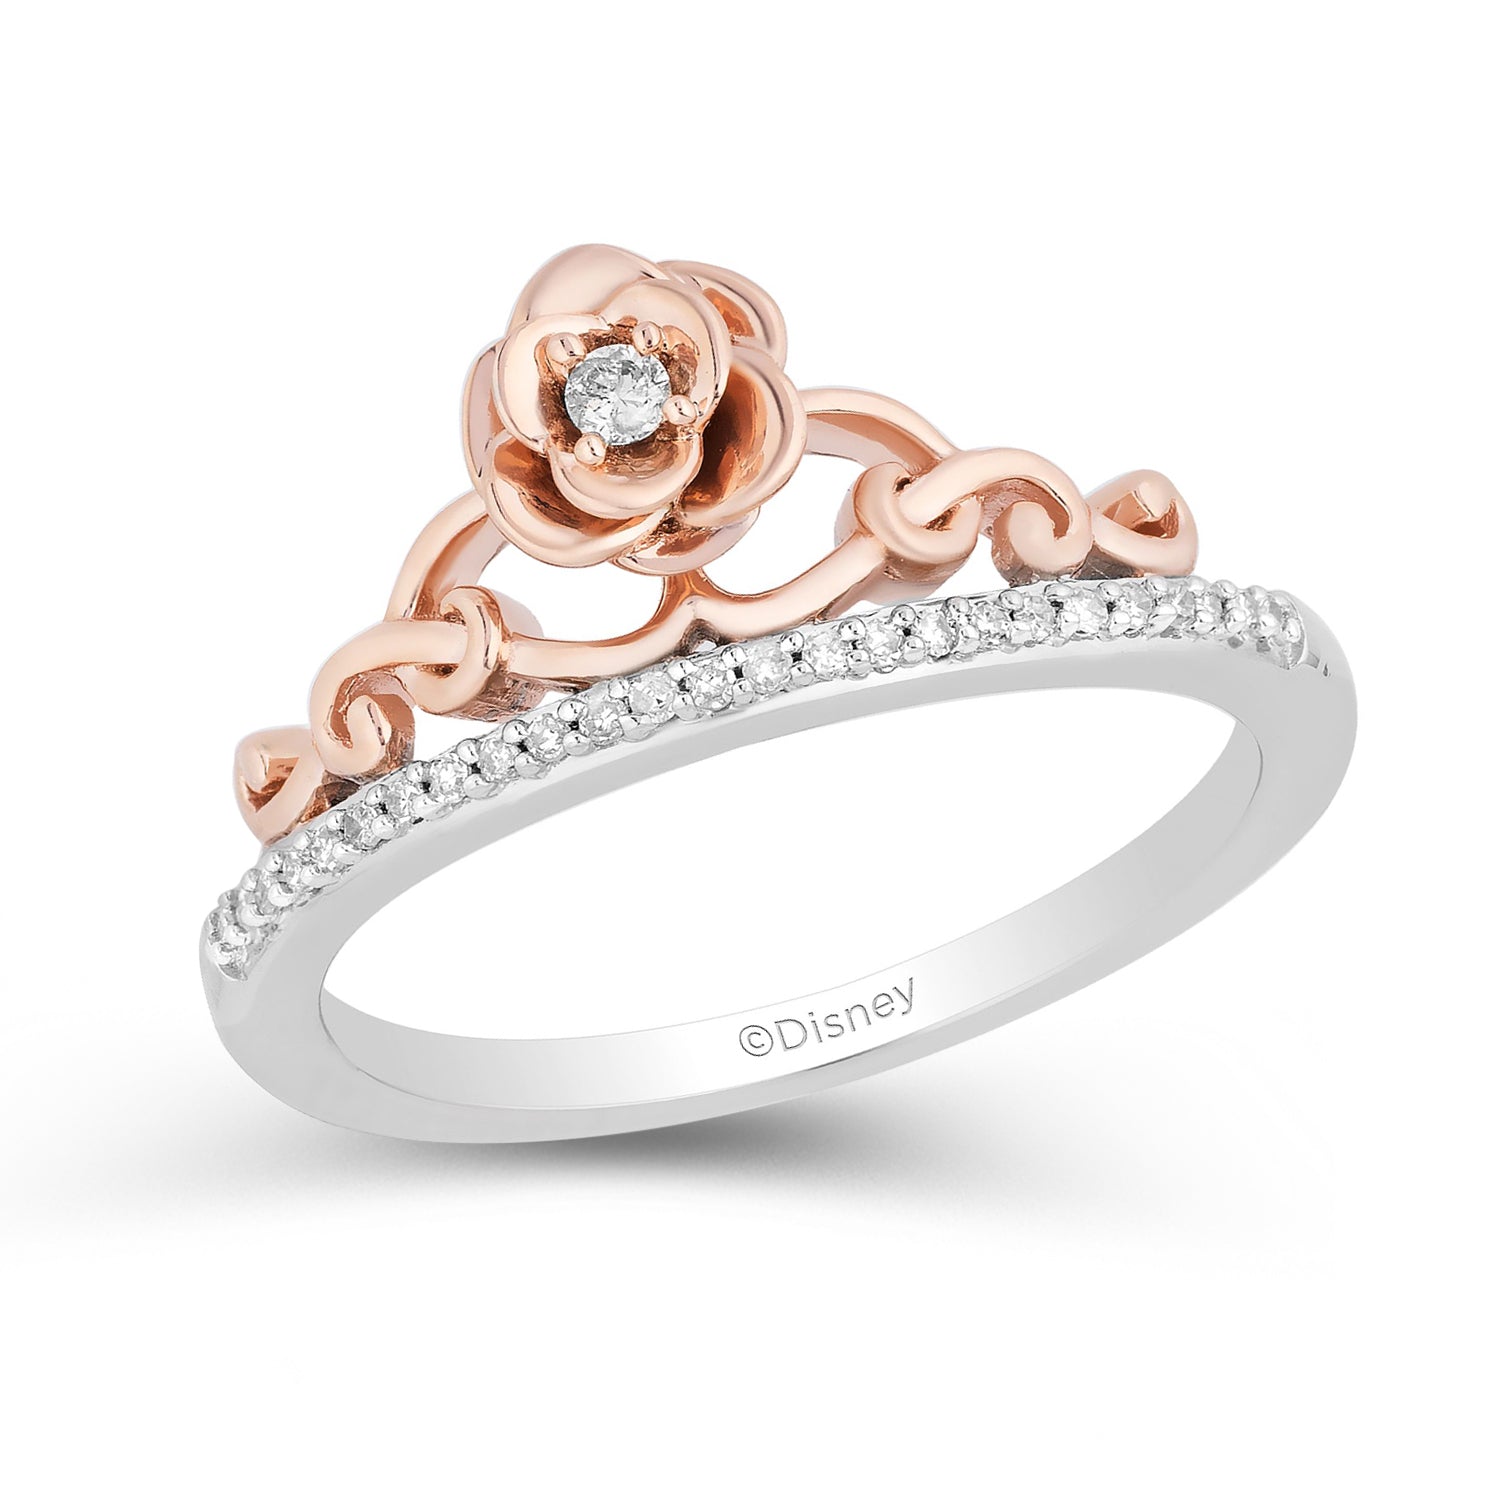 Disney Rapunzel Inspired Diamond Ring in 14K Rose Gold over Sterling Silver  1/10 CTTW